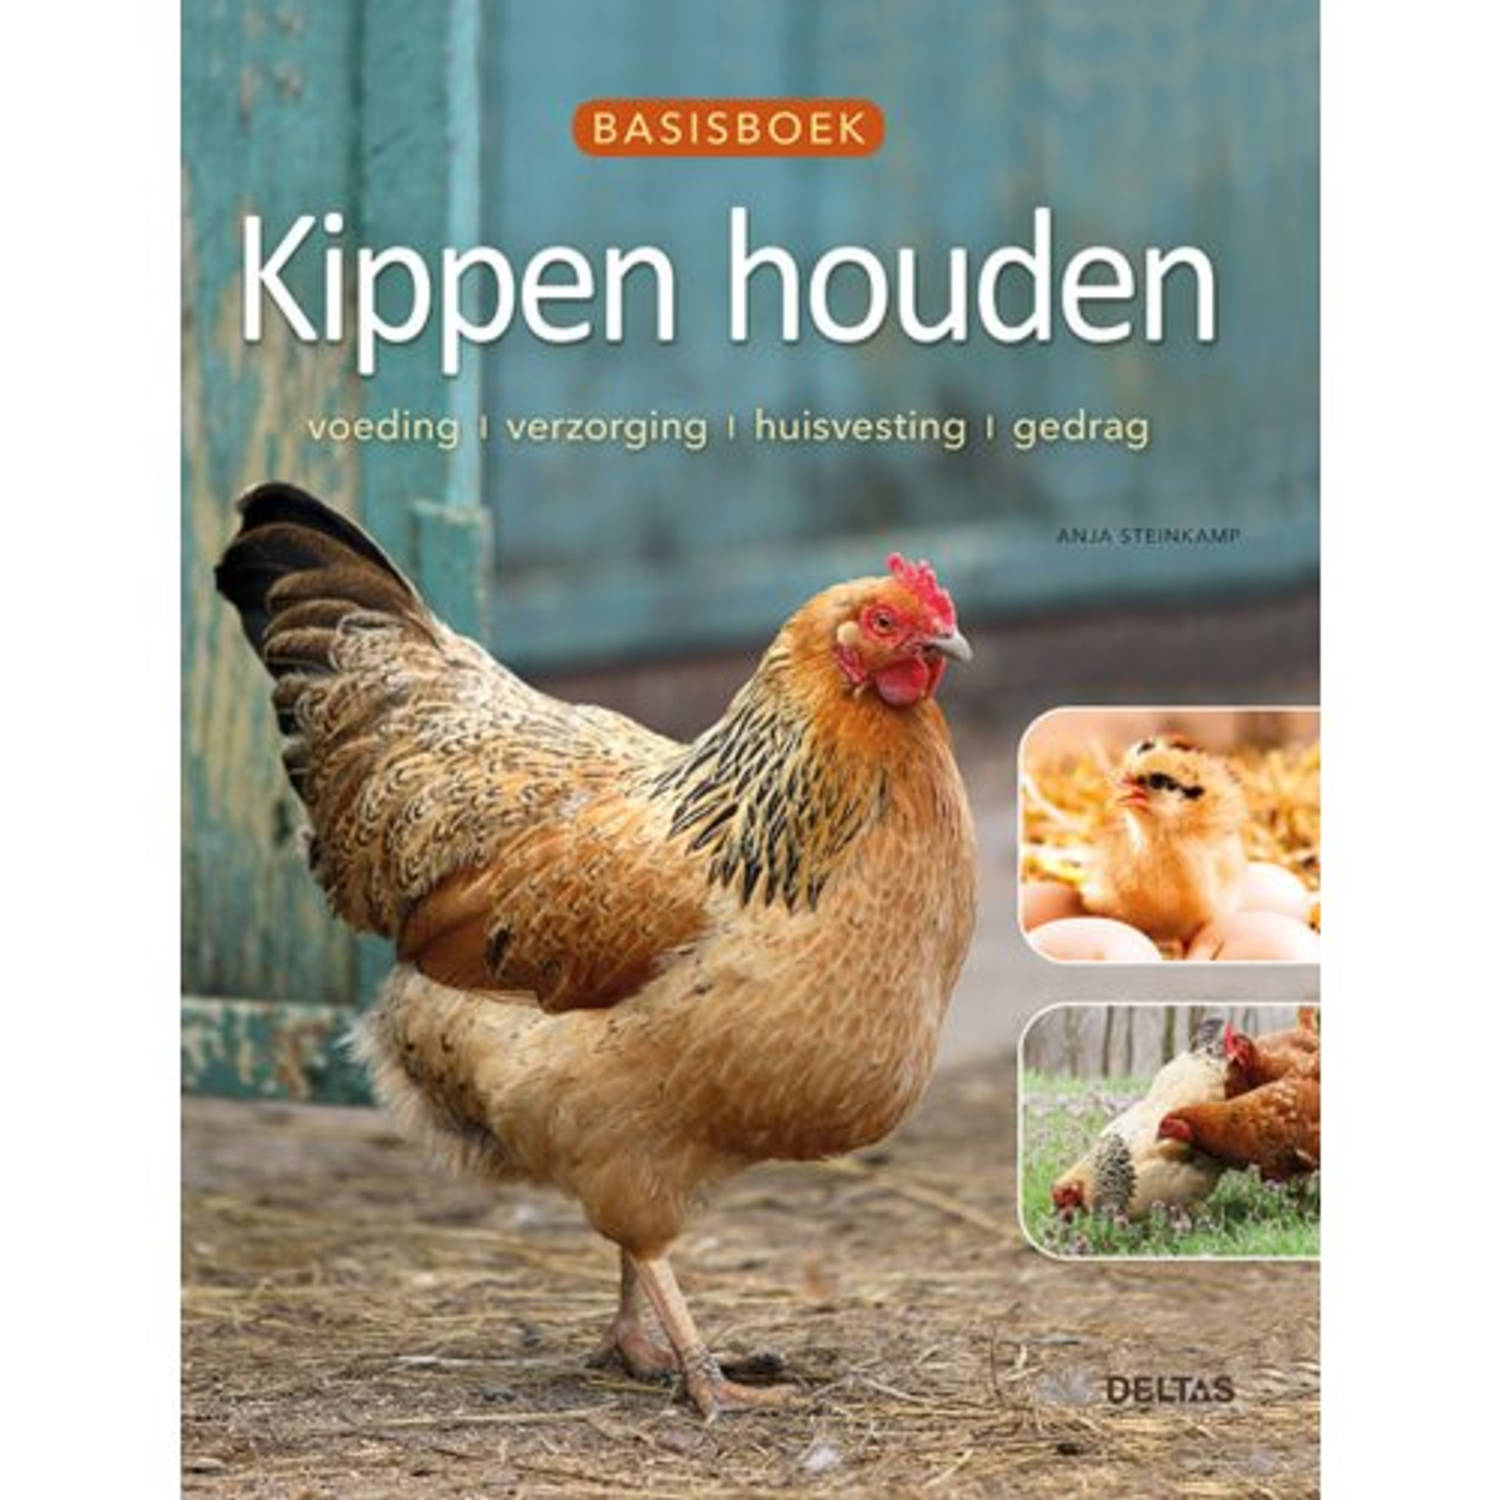 Basisboek Kippen houden. voeding verzorging huisvesting gedrag, Steinkamp, Anja J., Paperback